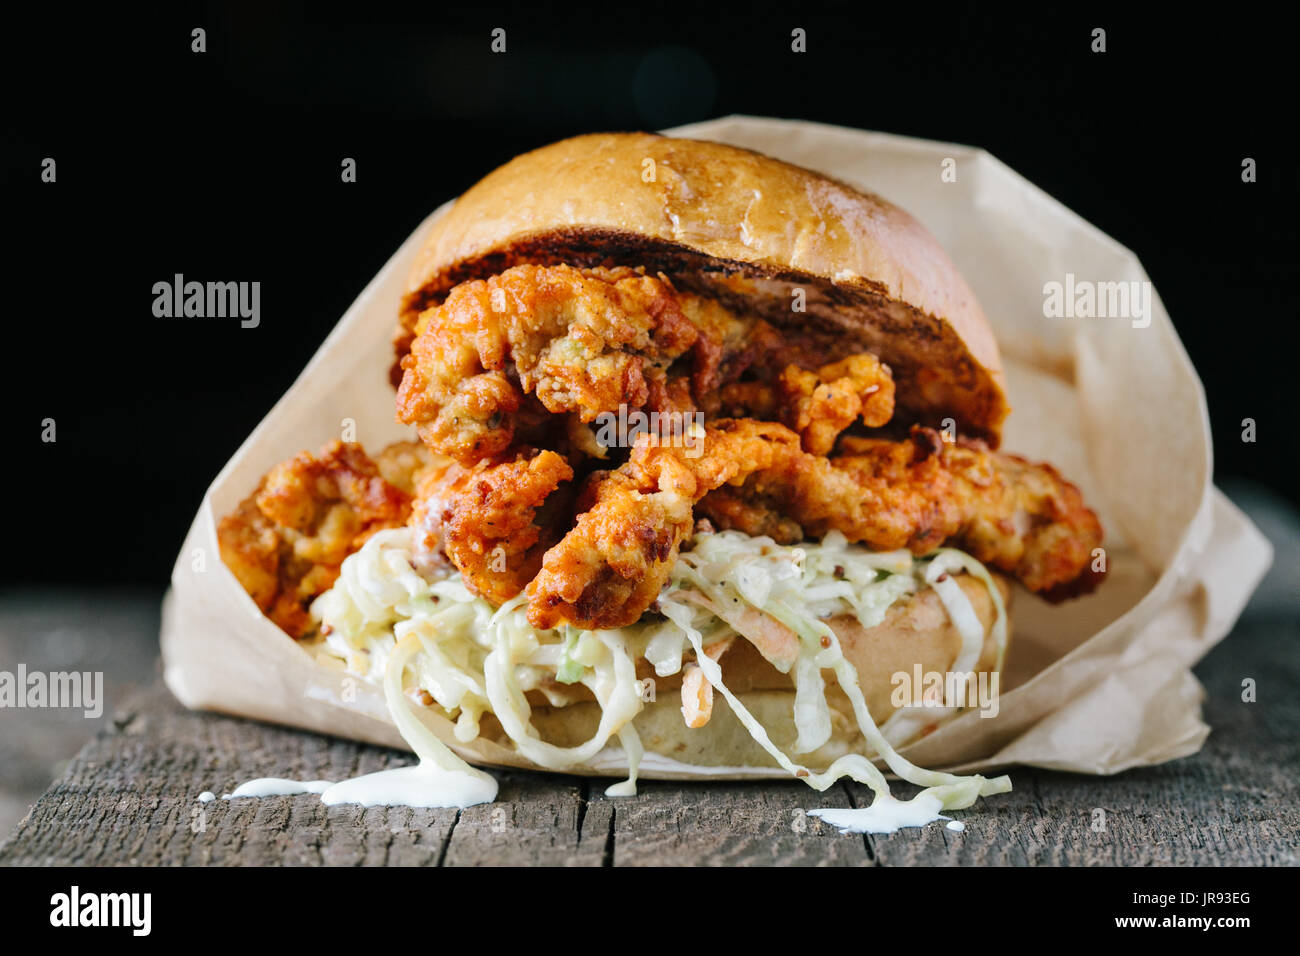 Fried crispy chicken sandwich with coleslaw on dark background horizontal Stock Photo